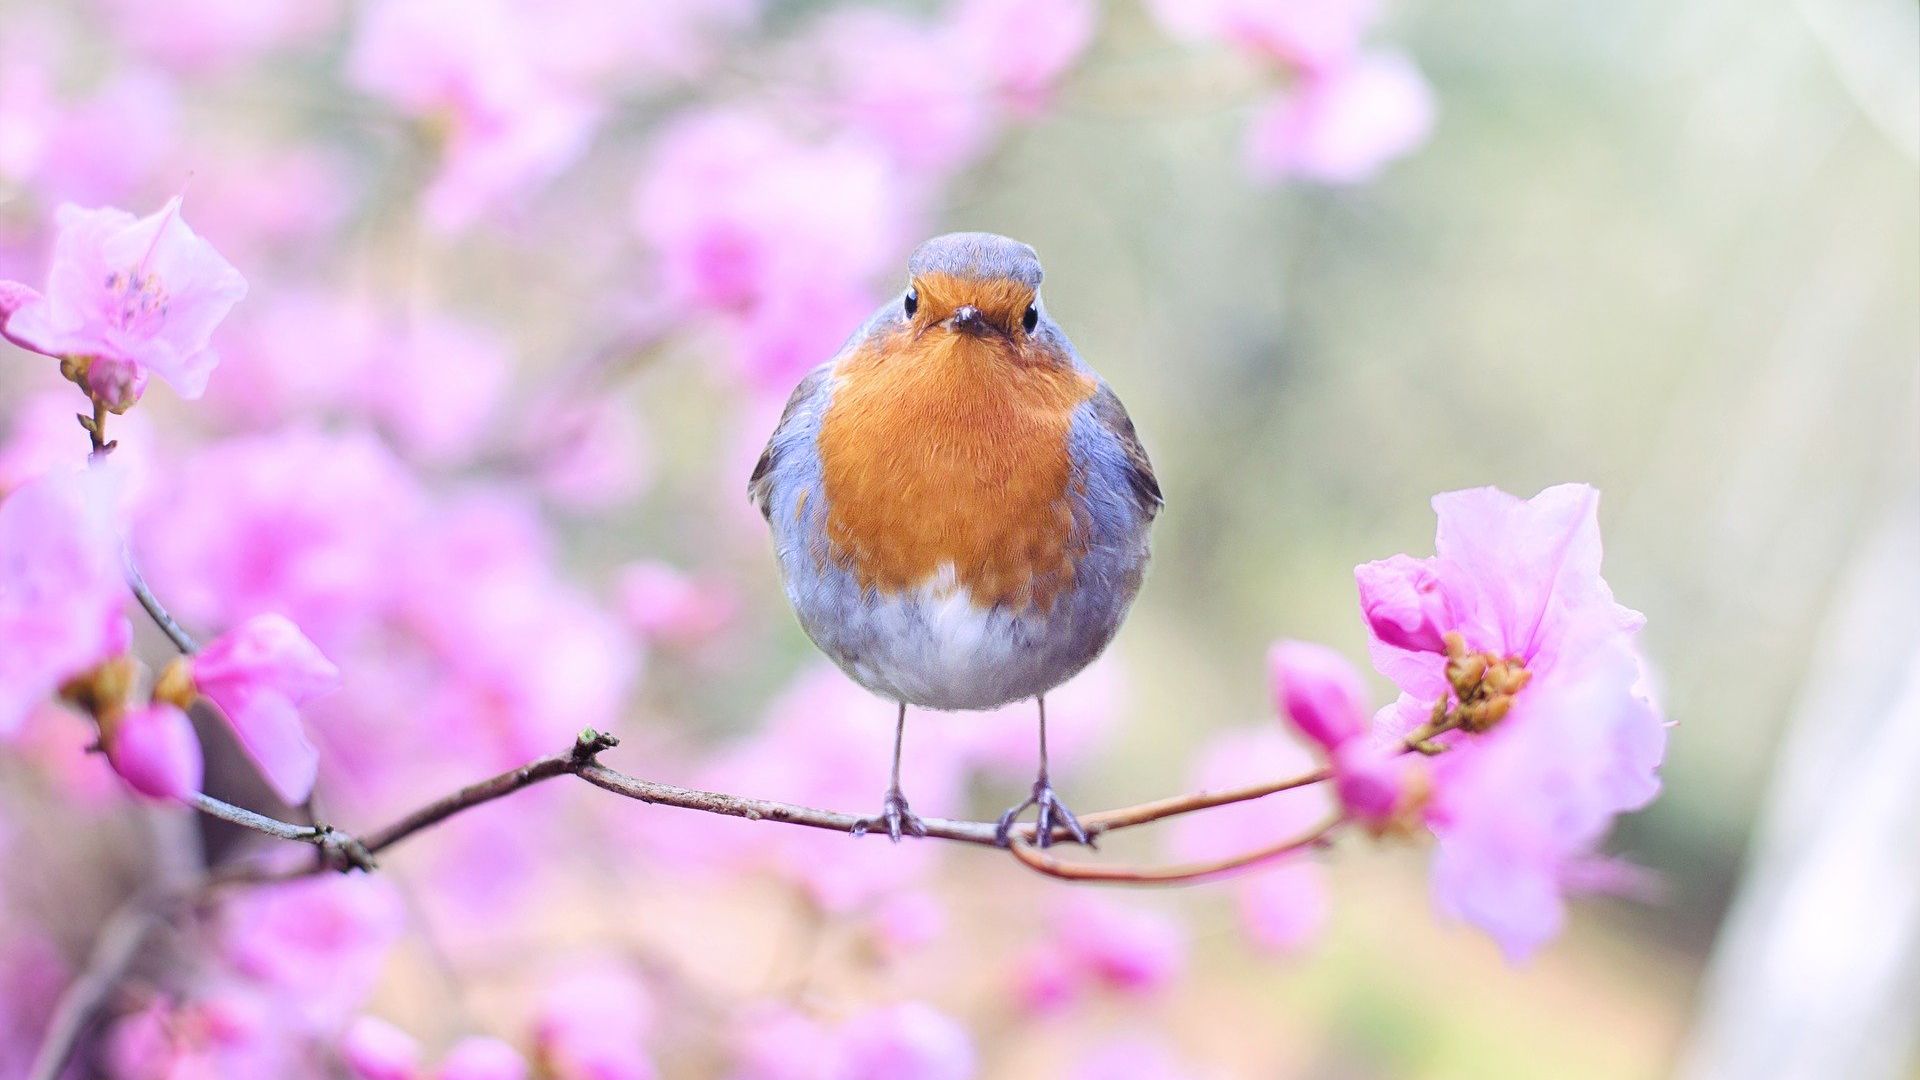 https://www.numerama.com/content/uploads/2019/03/oiseau-printemps-nature.jpg